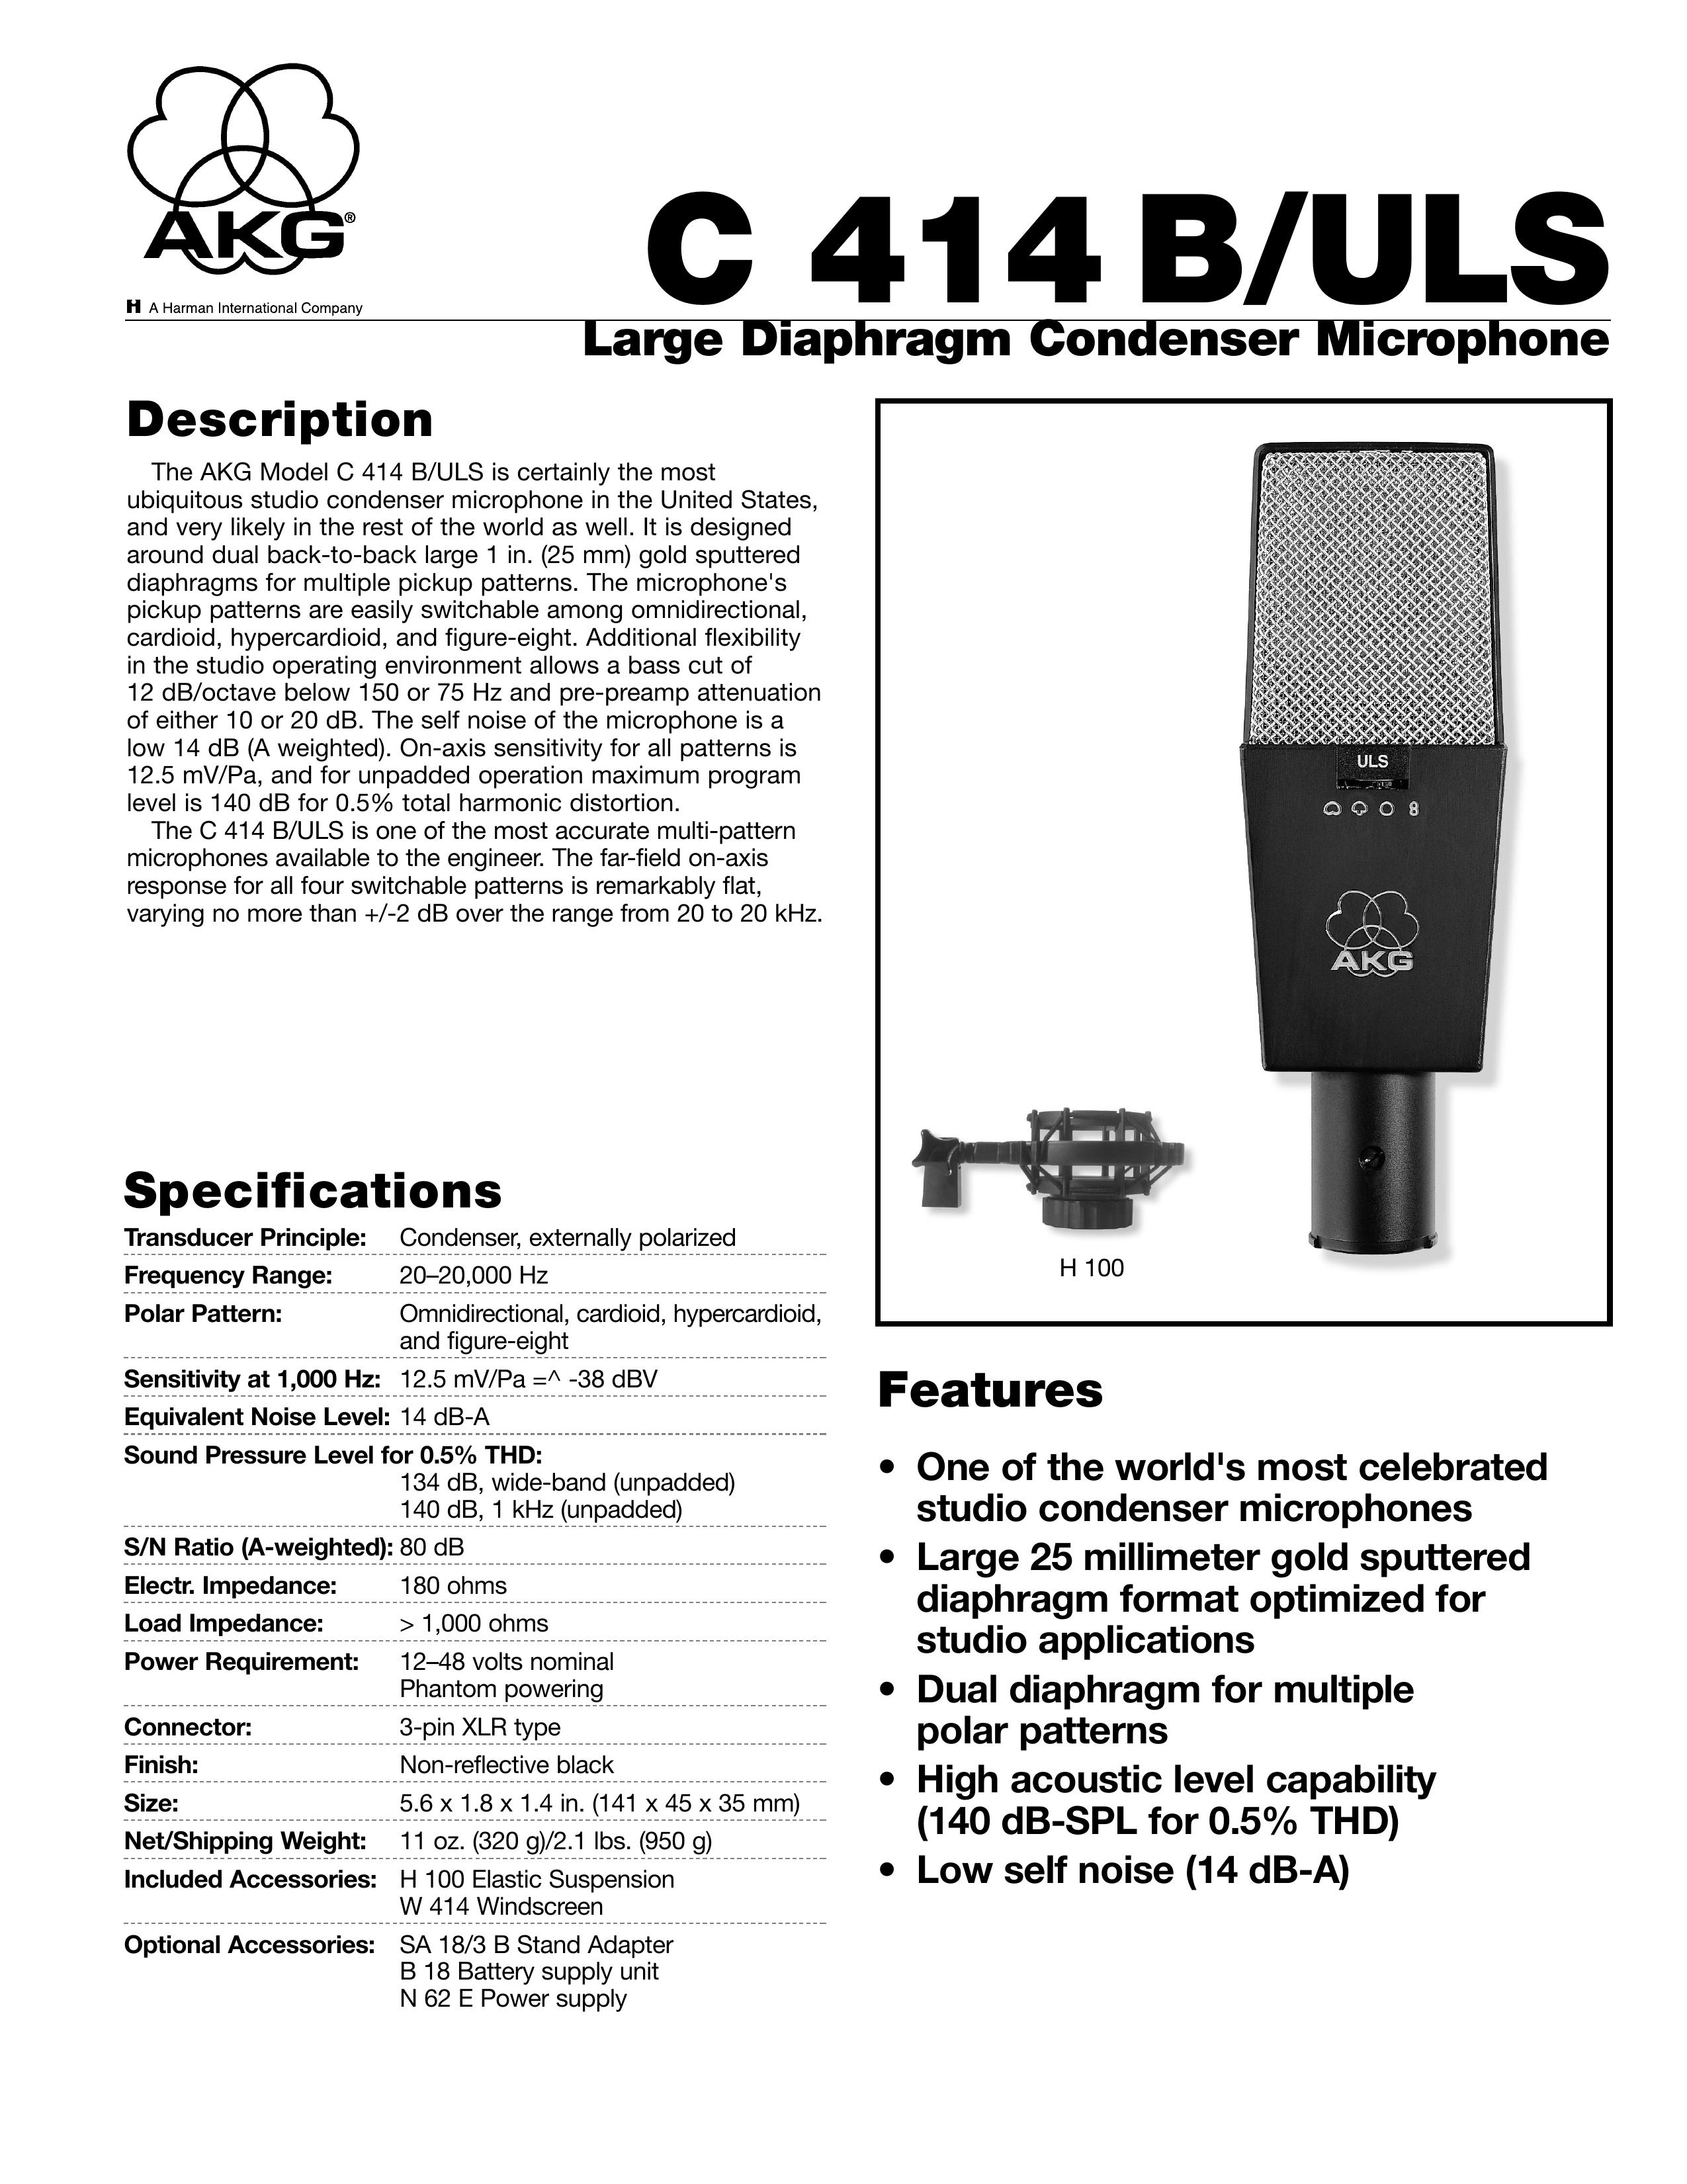 AKG Acoustics C 414 B/ULS Microphone User Manual